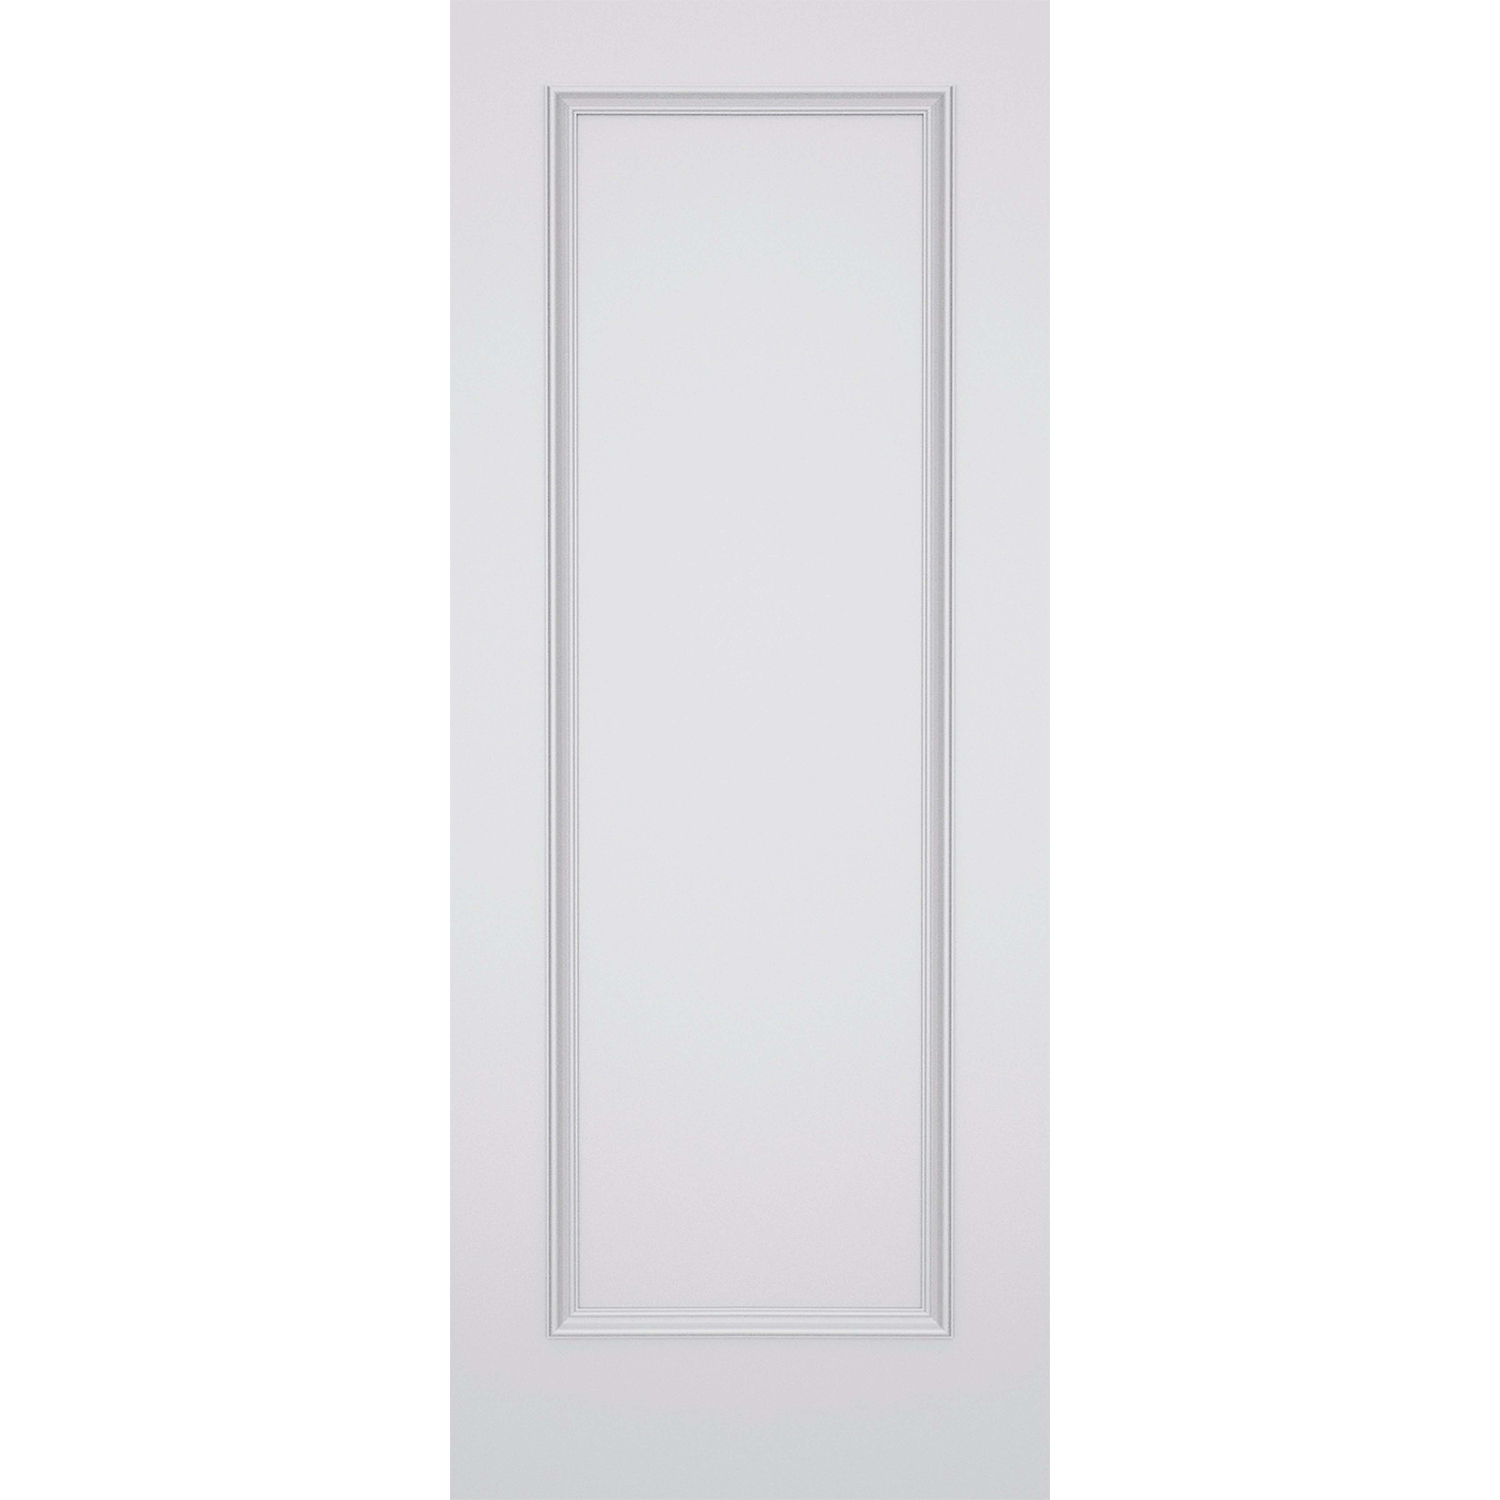 1 Panel 80 x 32 x 1-3/8 Smooth Hollow Door Raised